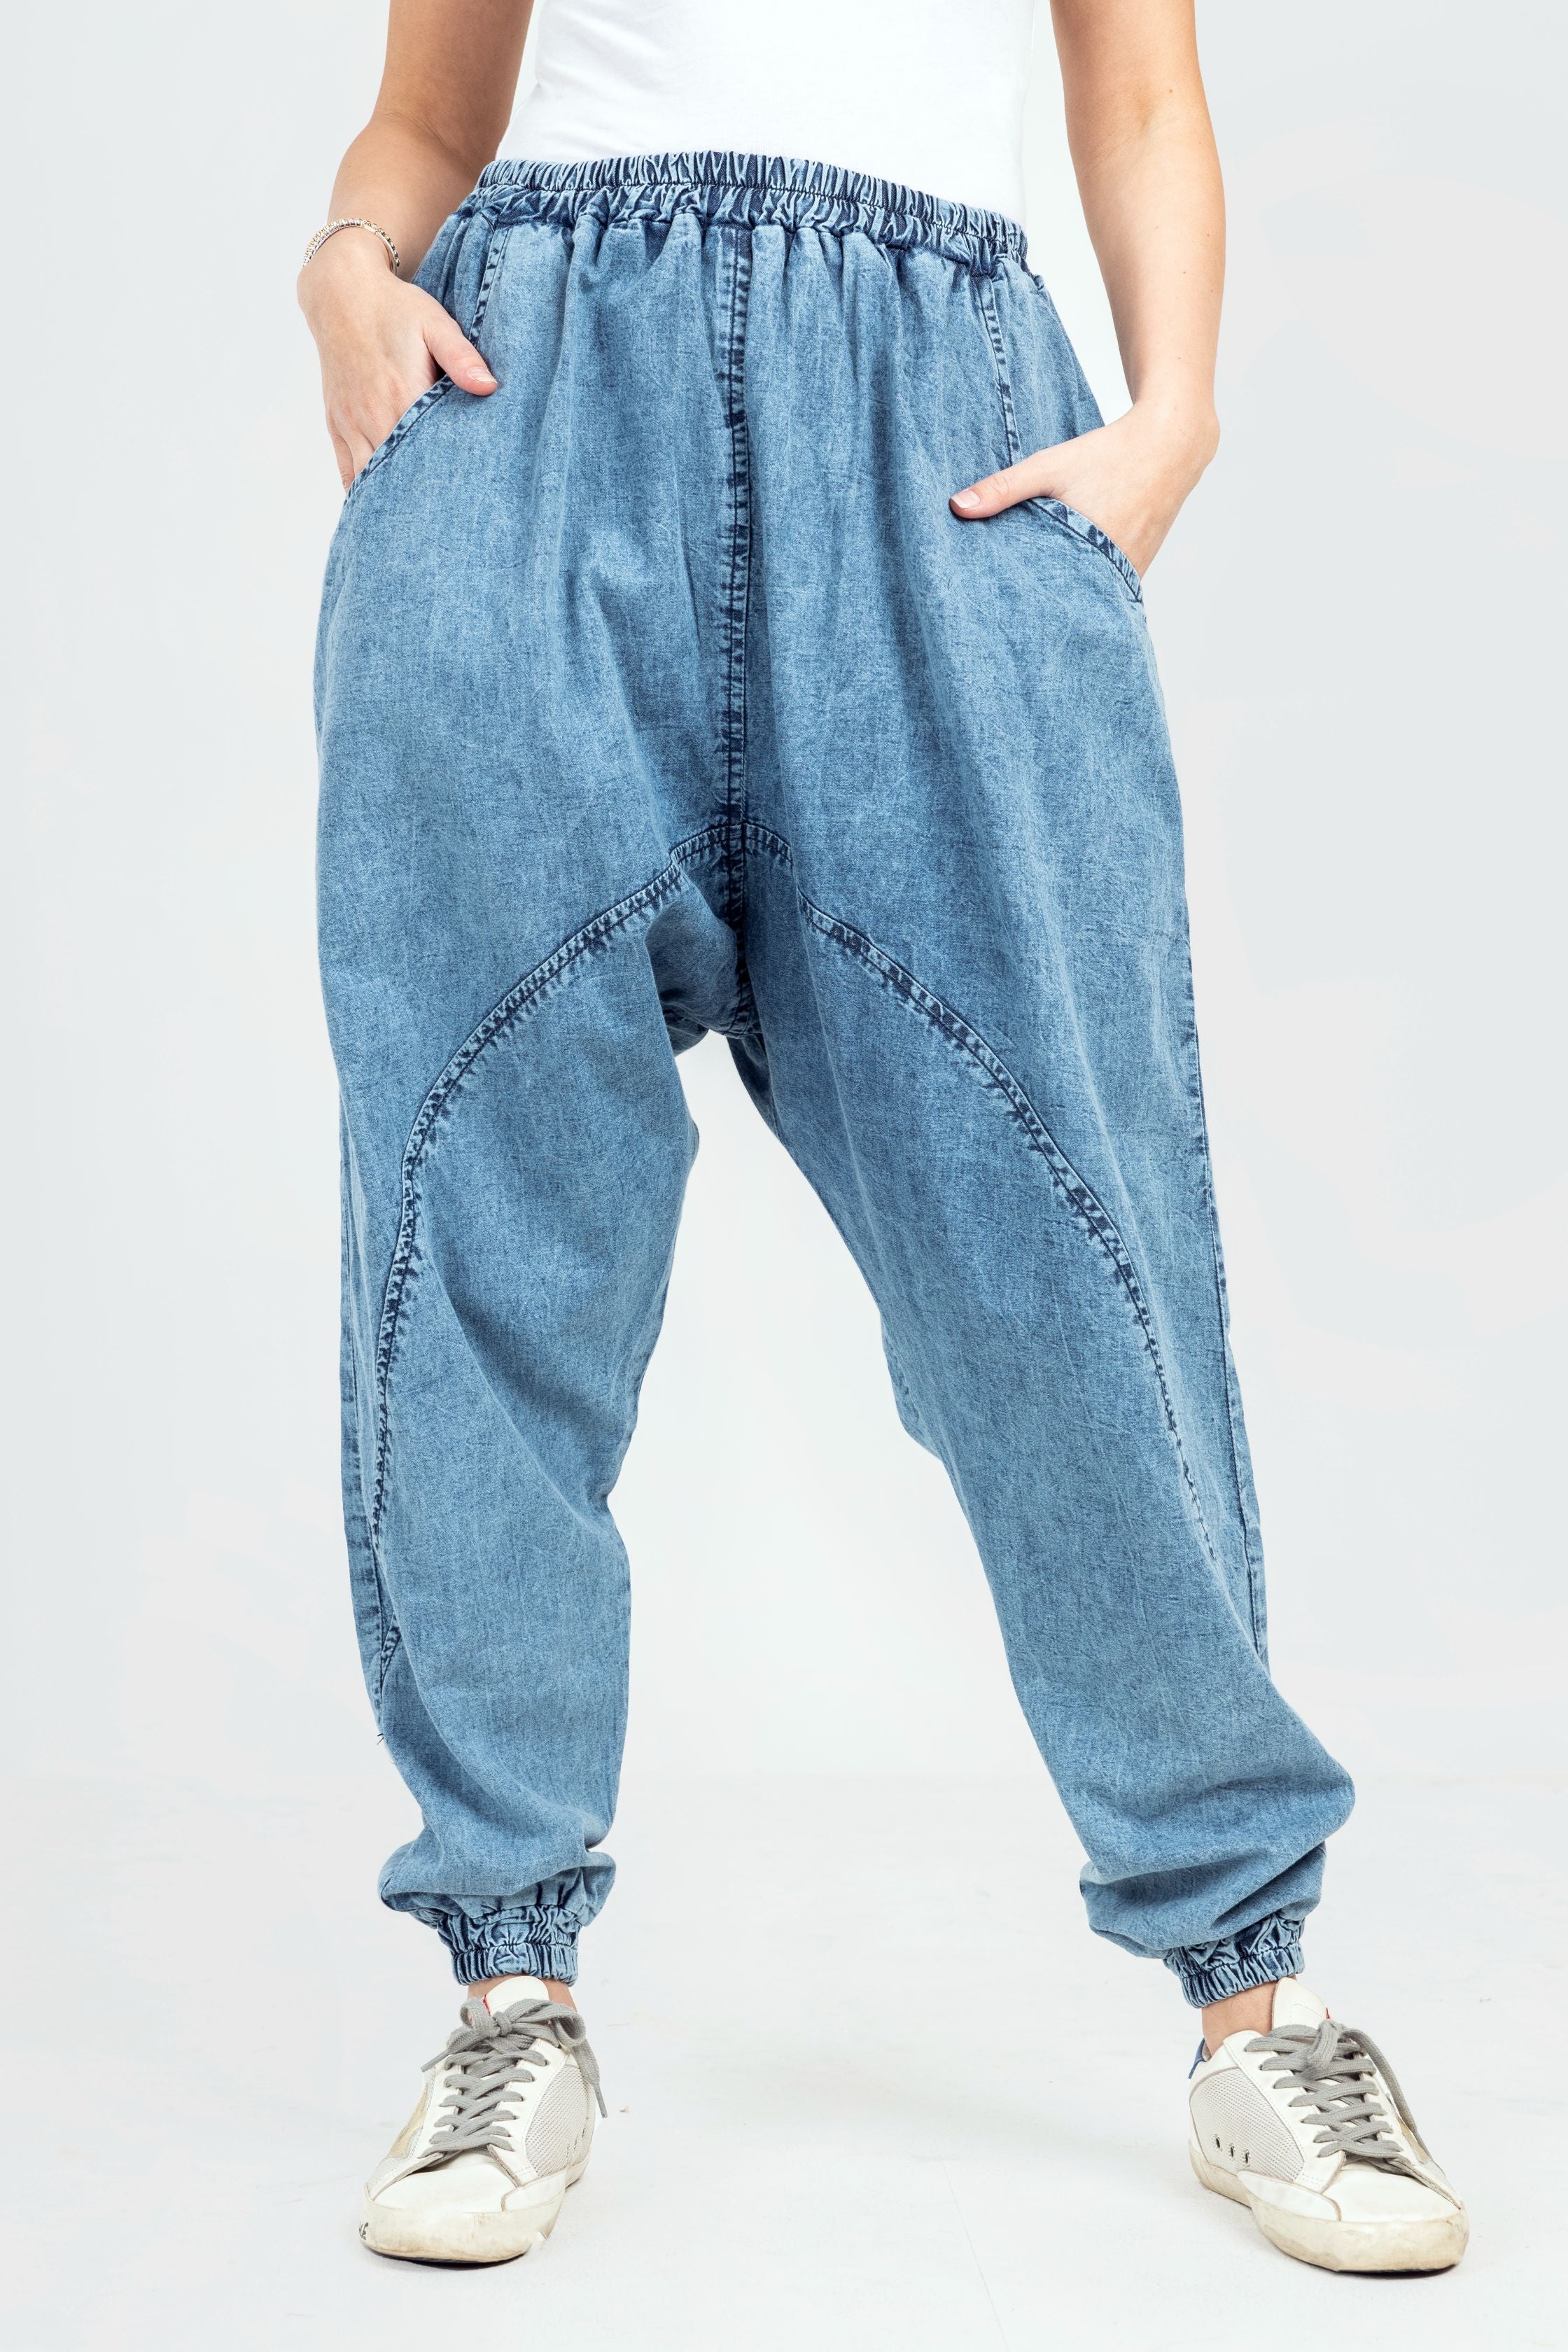 Premium Jean Jumpsuit Romper w/ Cargo Pockets | Buddha Pants